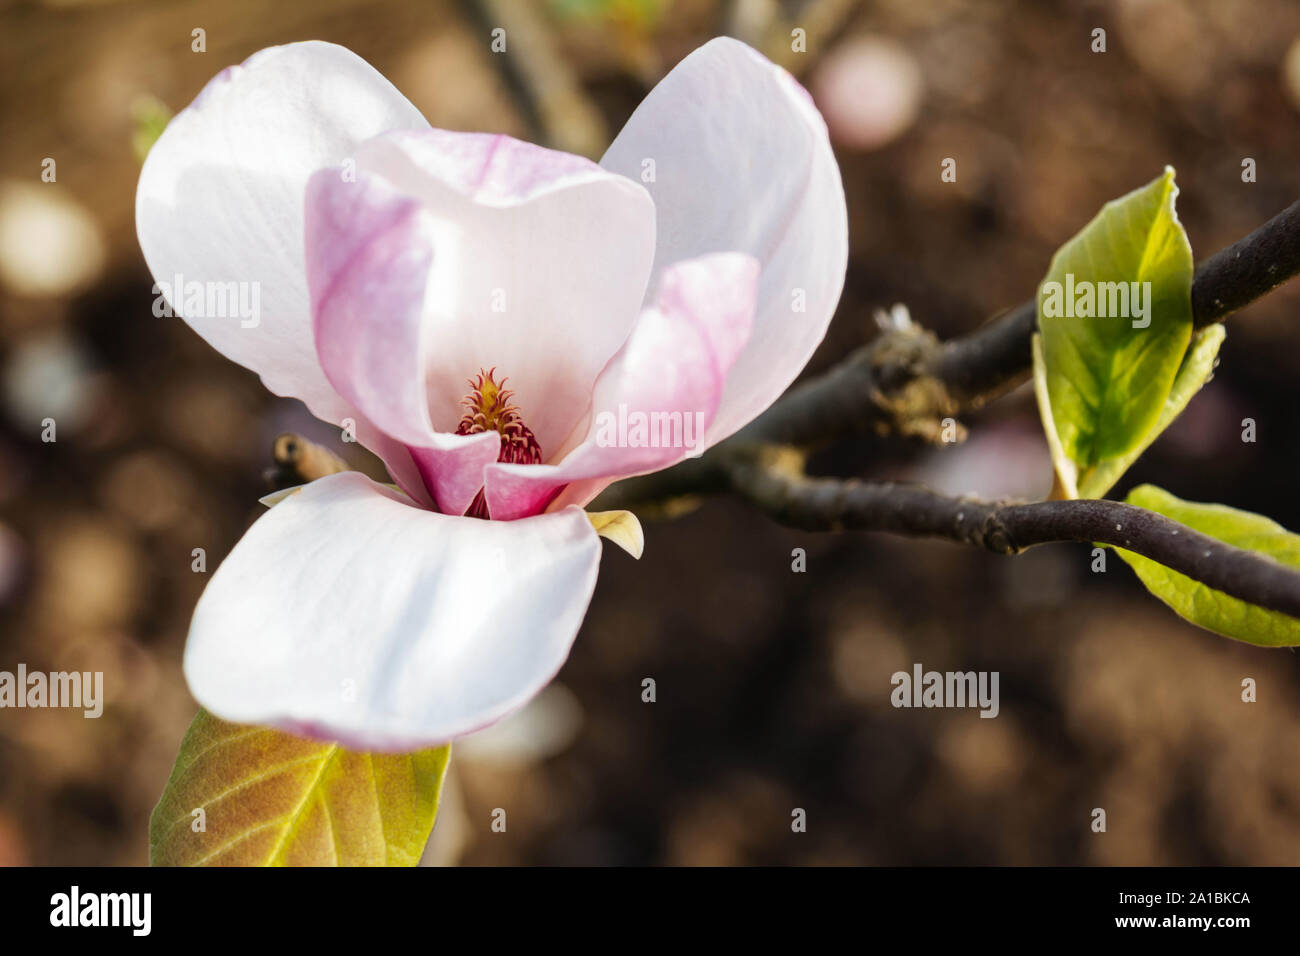 Magnolia spring flower Stock Photo